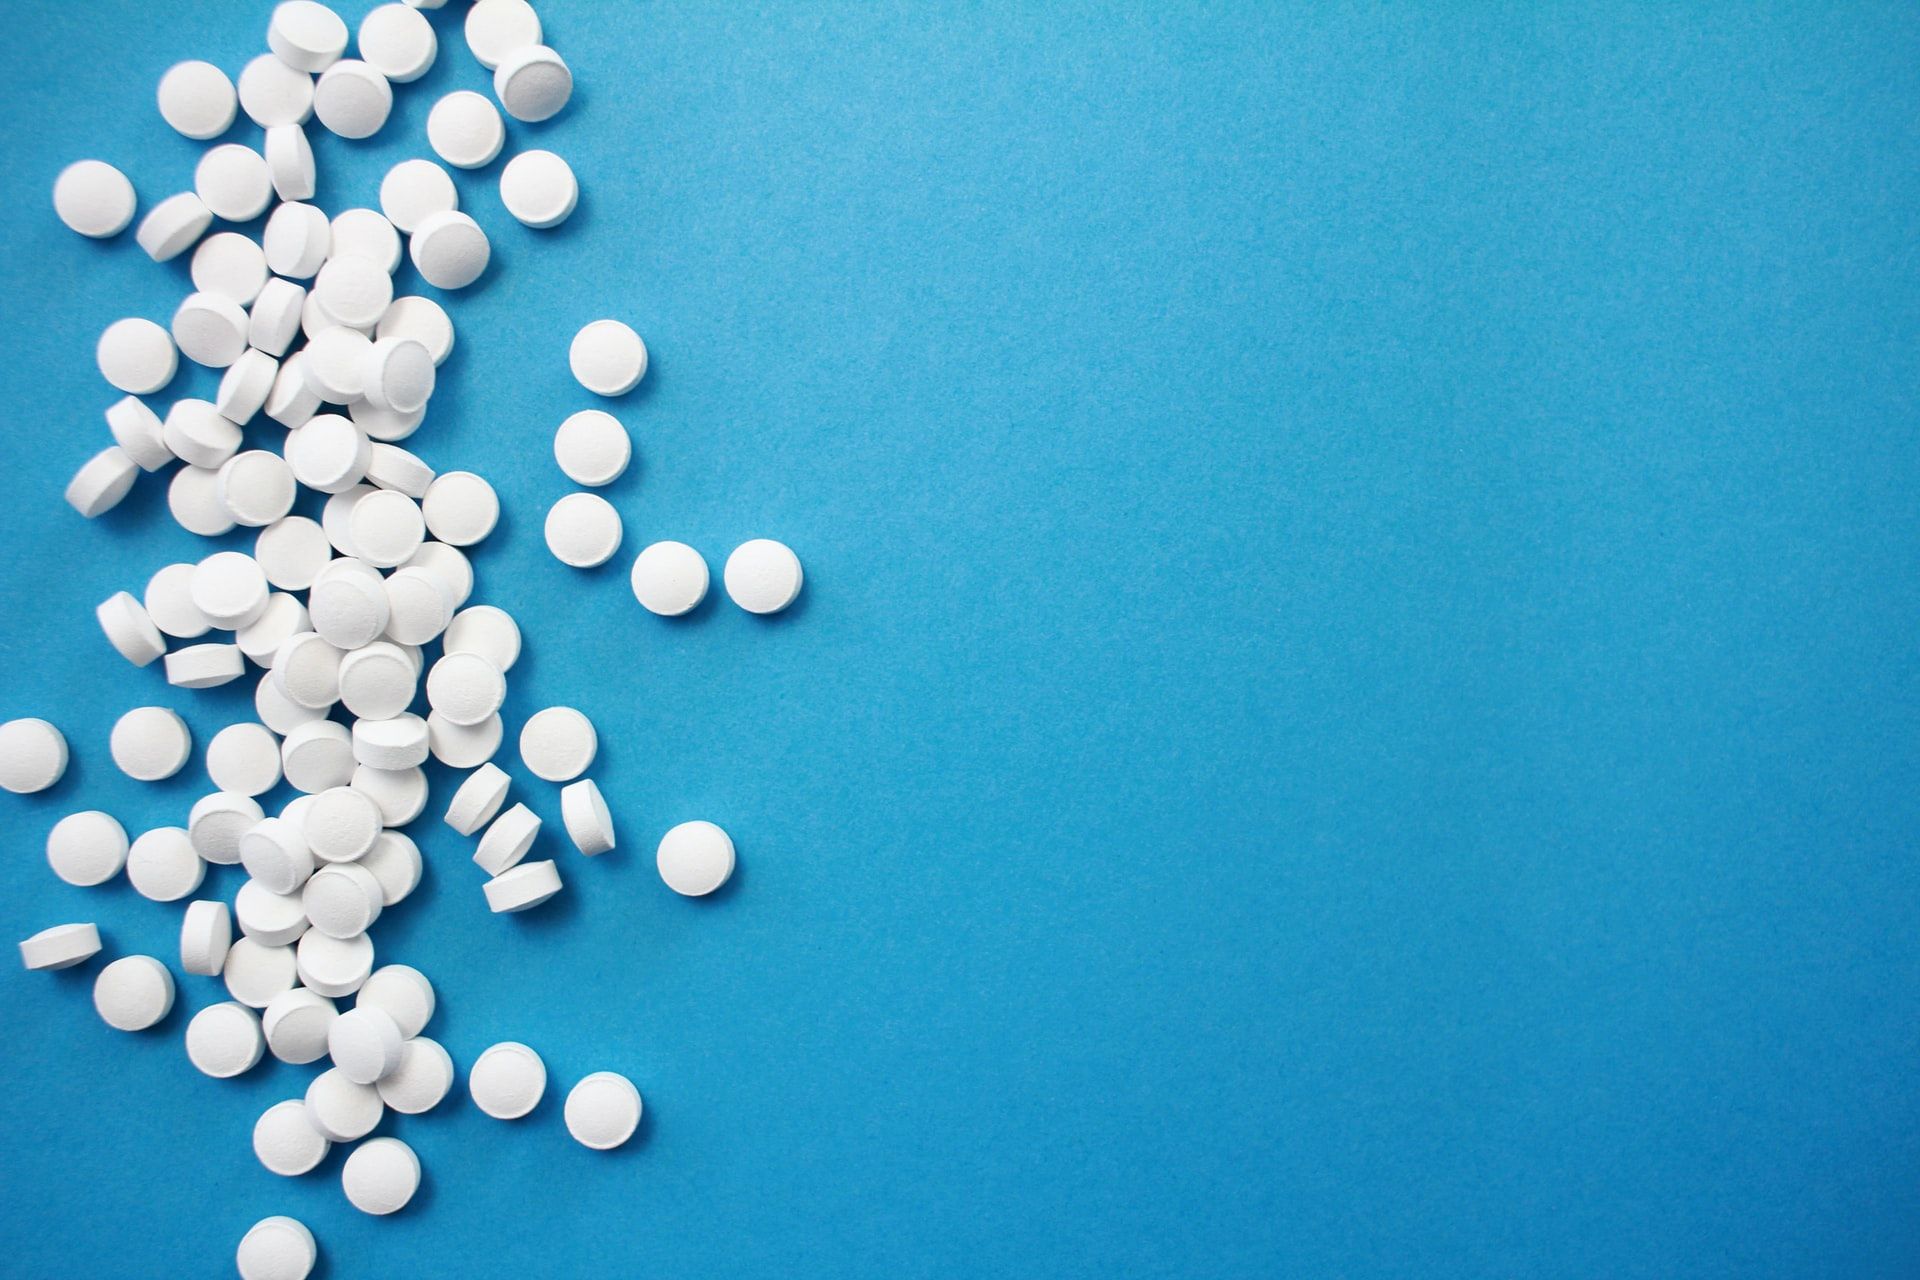 Adderall alternatives pills on blue table